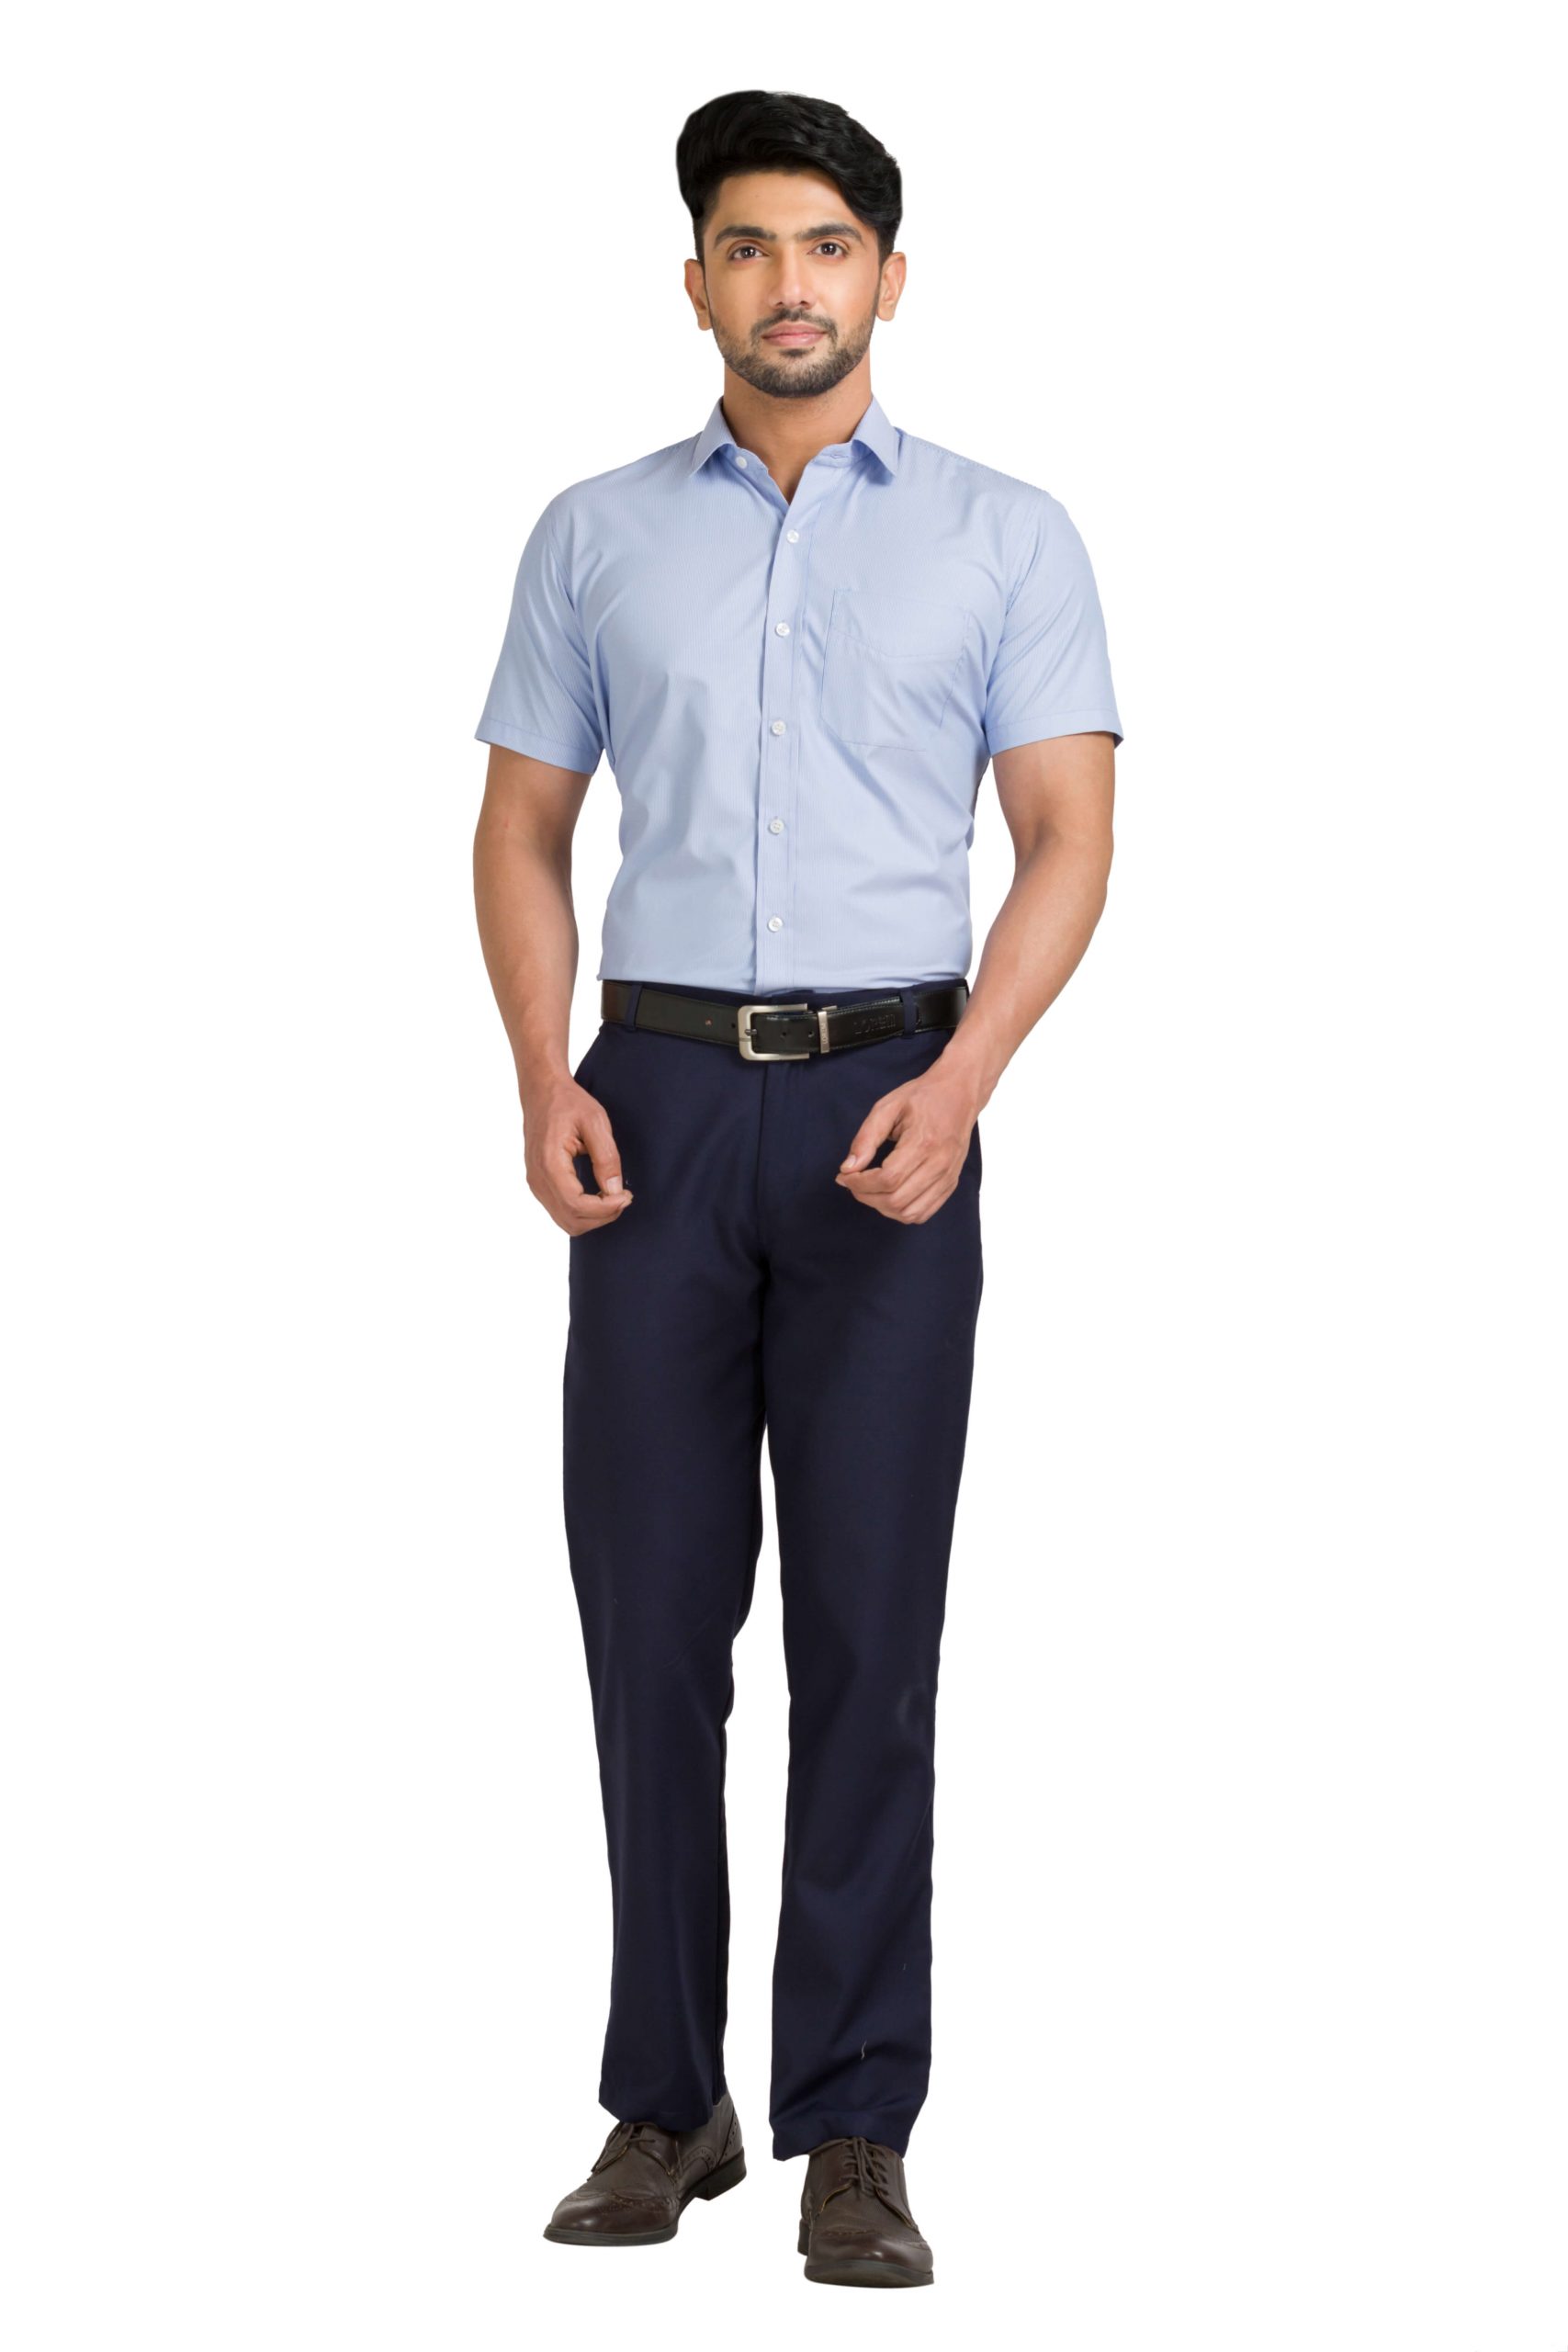 Panama Blue Half Sleeve Striped Shirt